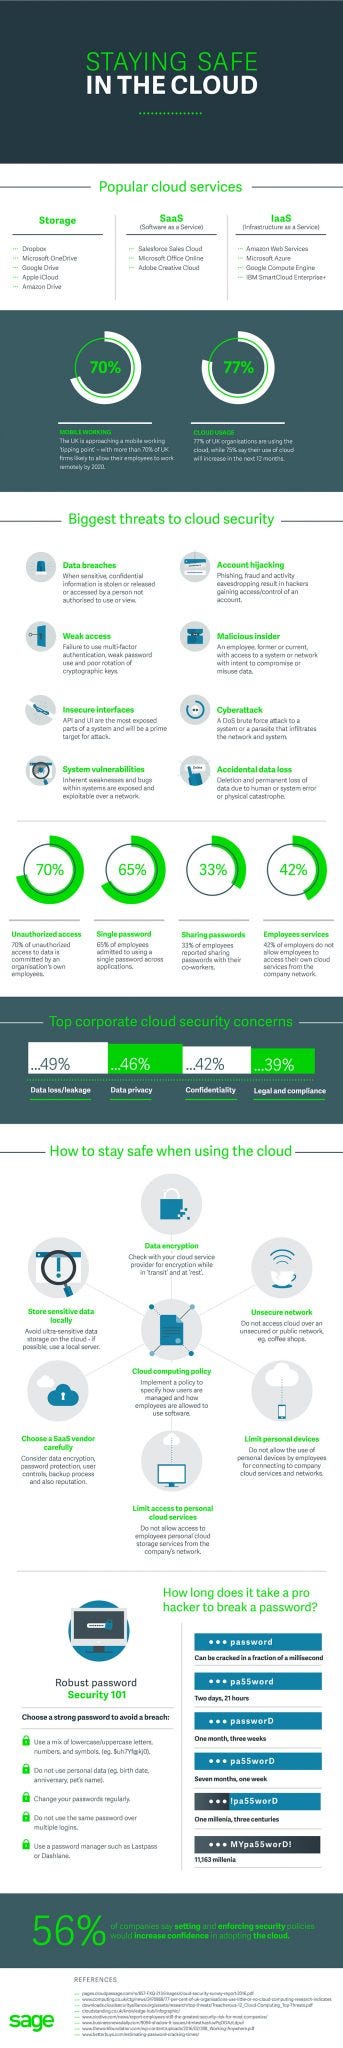 Sage-Cloud-Security-Infographic.jpg